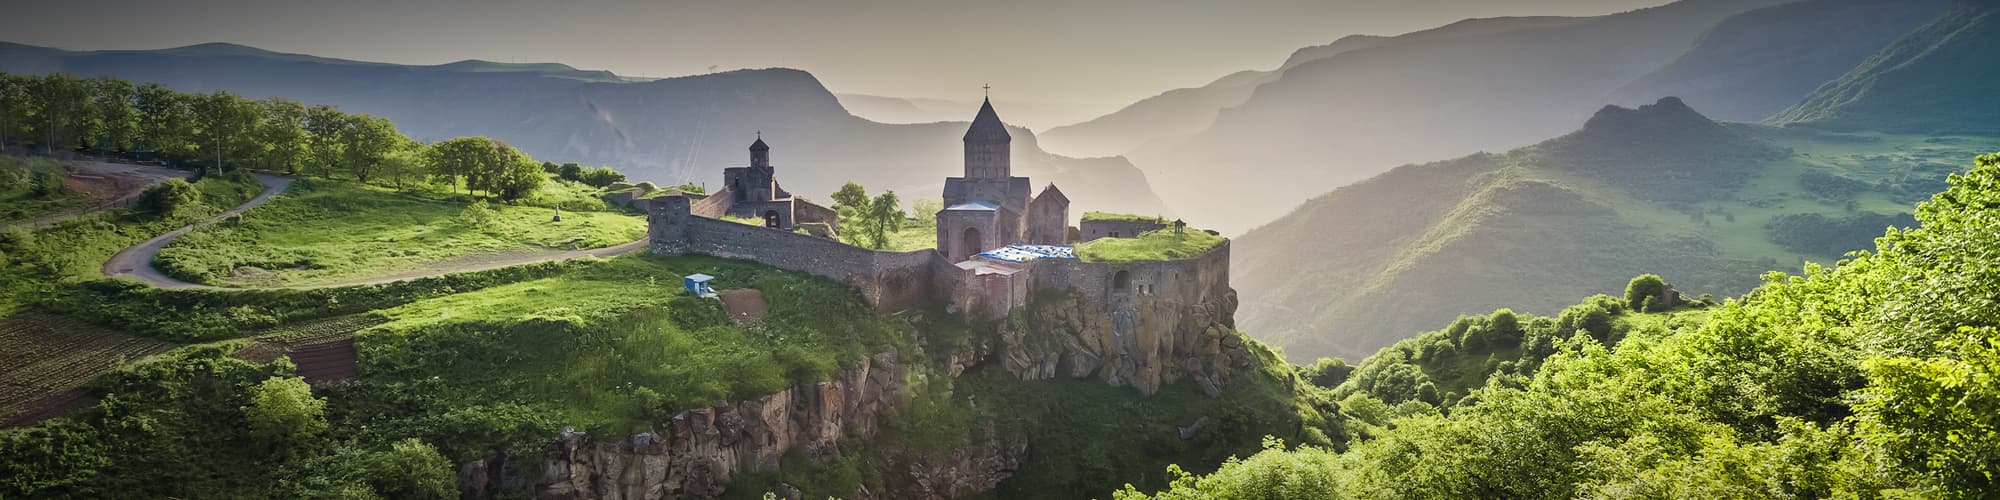 Voyage liberté Arménie © Goinyk / Adobe Stock